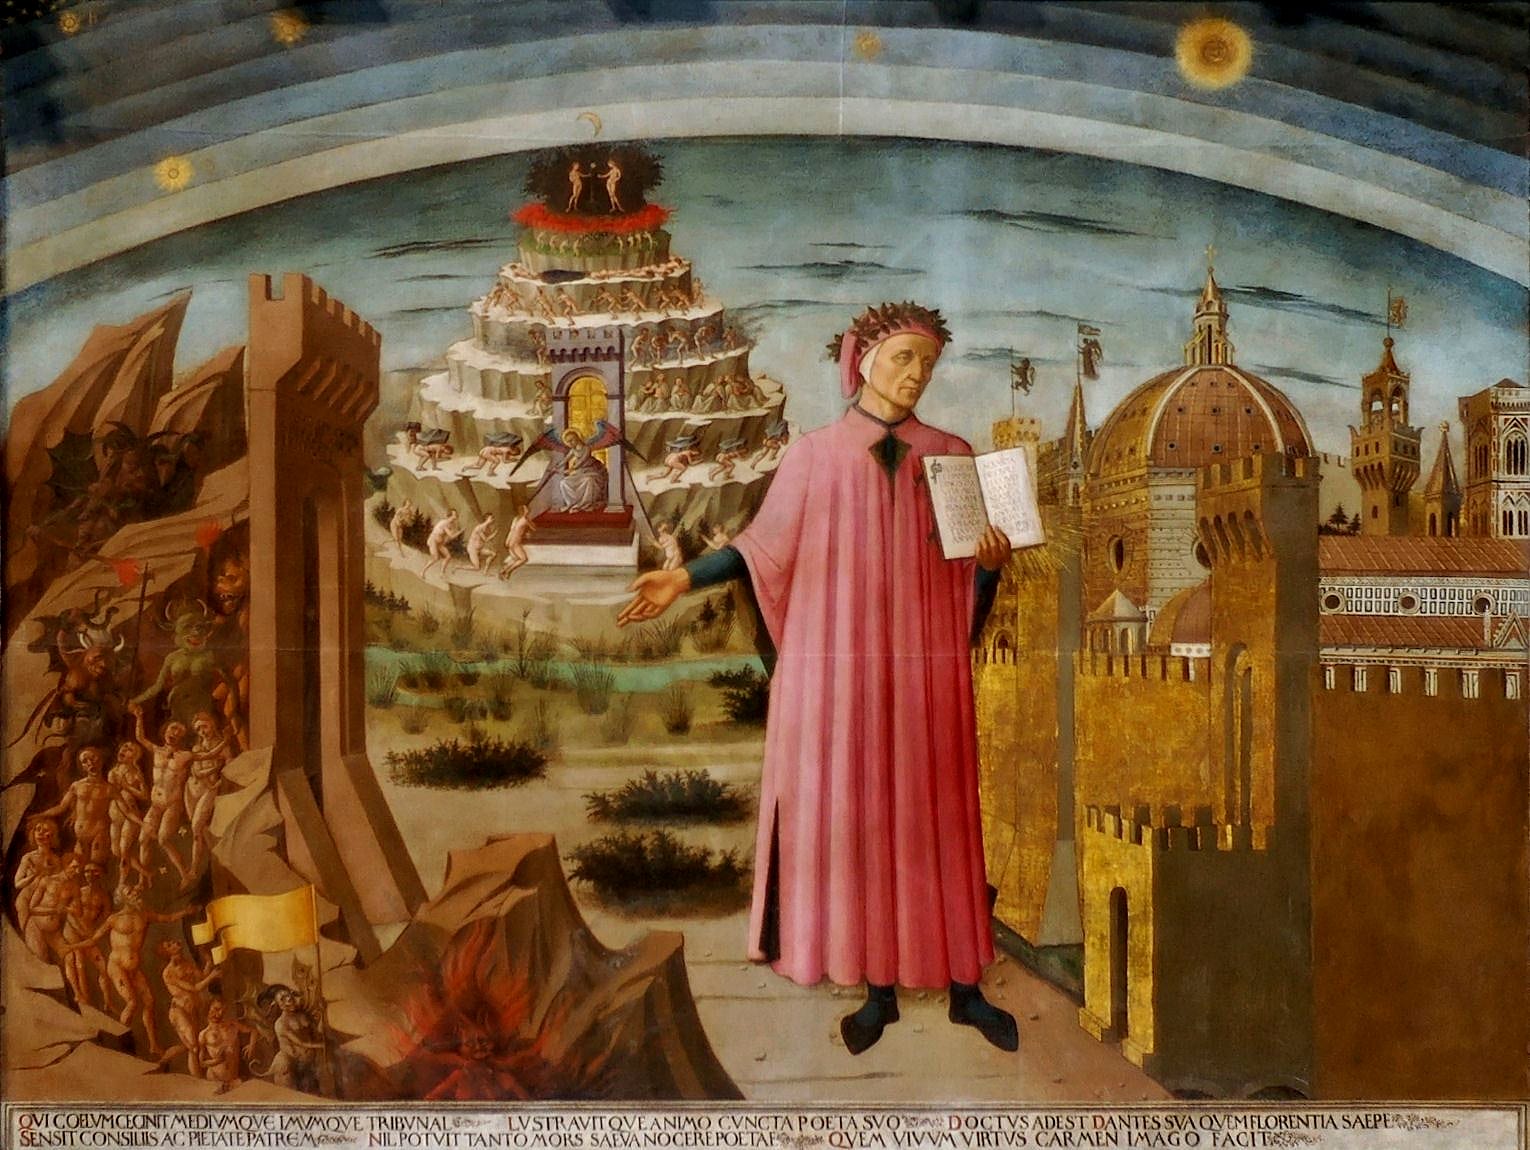 The Divine Comedy, by Dante Alighieri